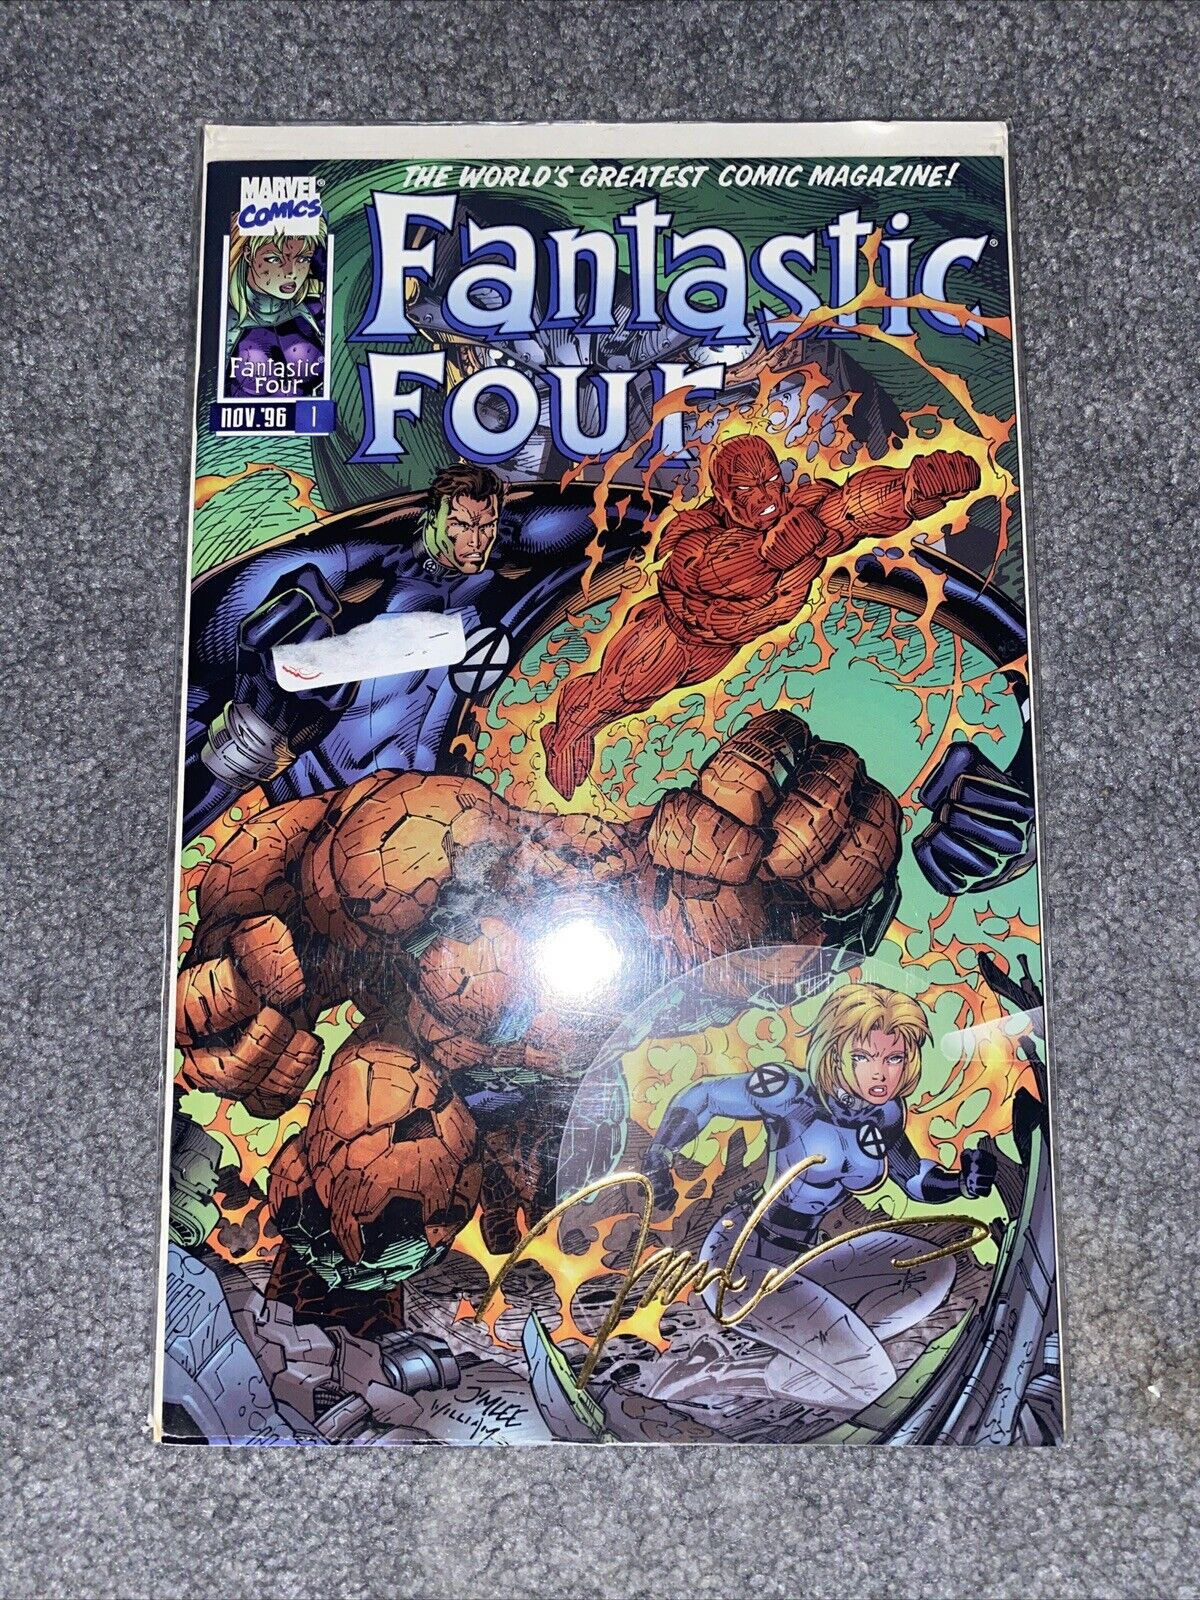 Fantastic Four #1 1996 Gold signed by Jim Lee, sealed. #1668 MARVEL RARE